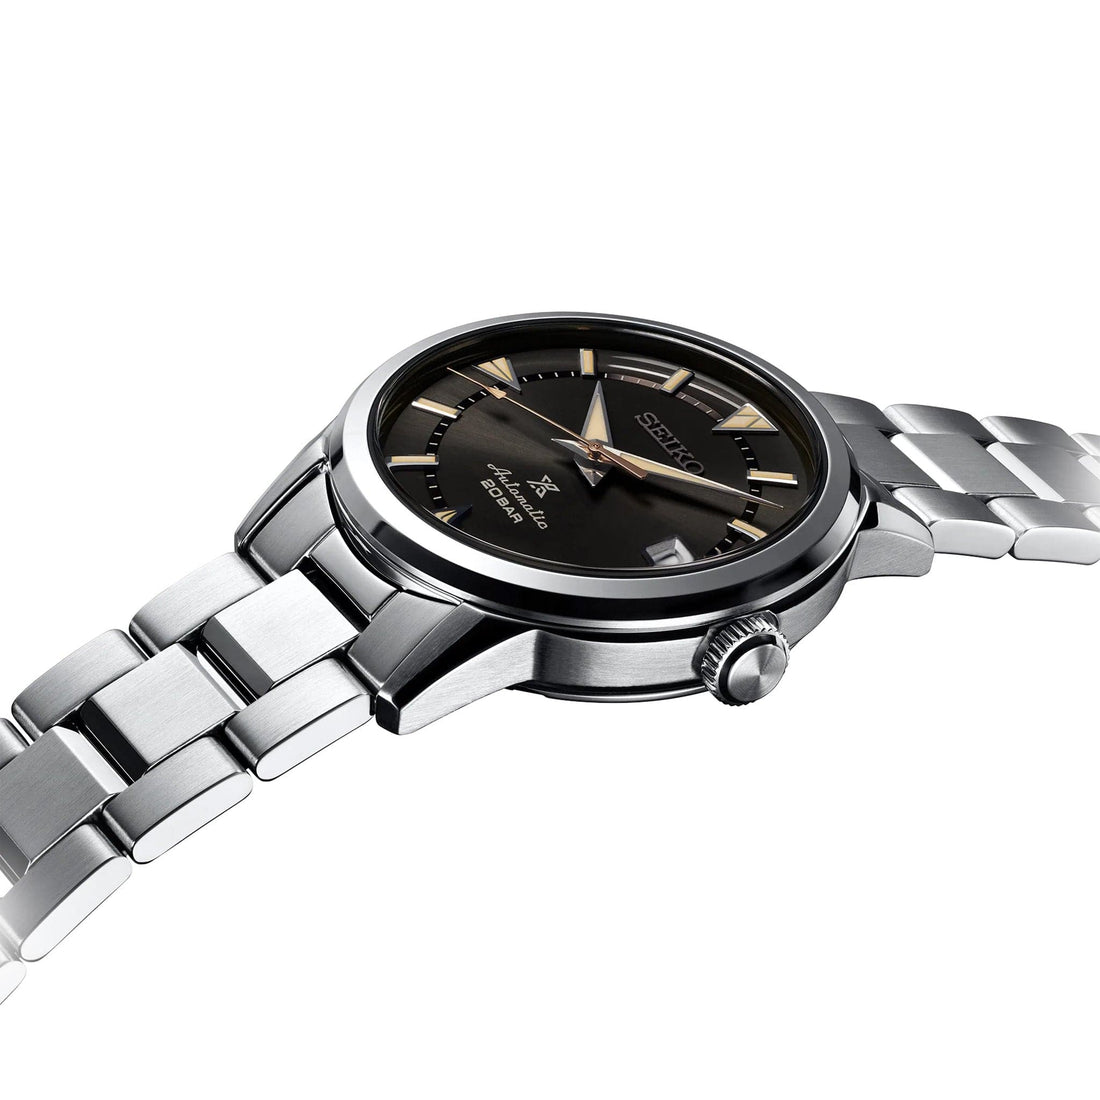 Seiko Prospex Alpinist SPB243 Charcoal Dial Automatic Watch Modeled